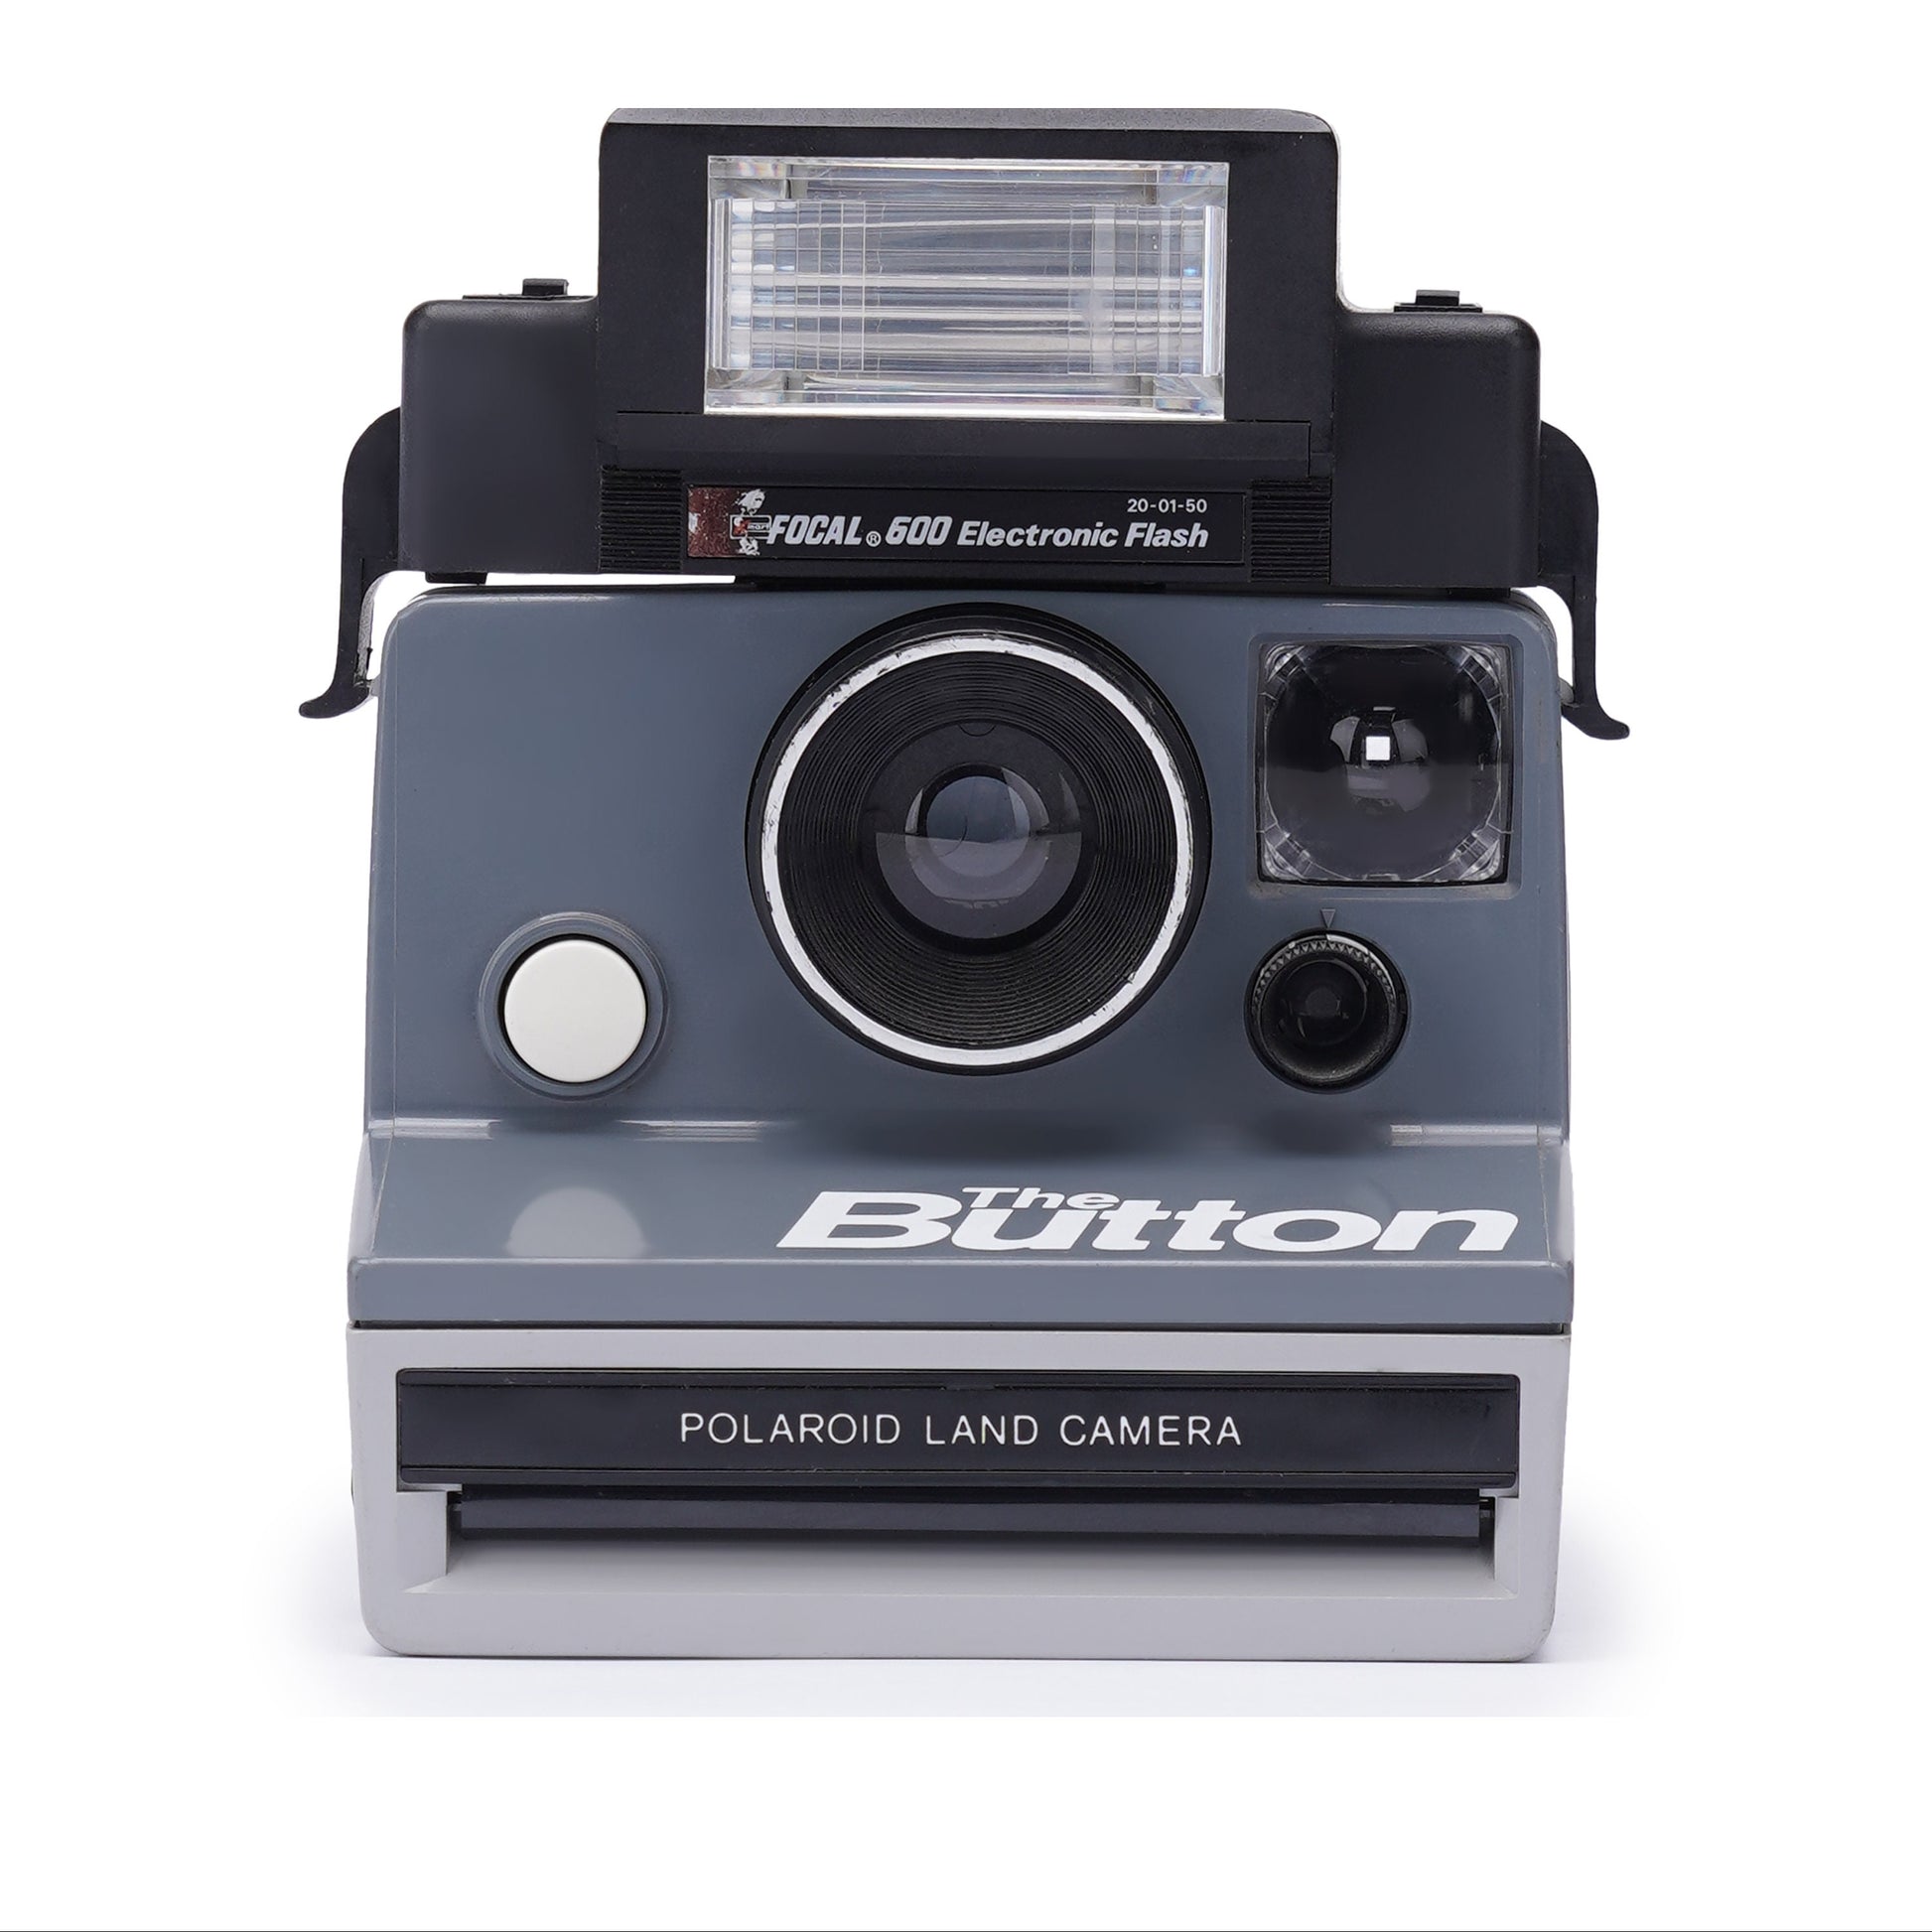 The Button Polaroid Land Camera